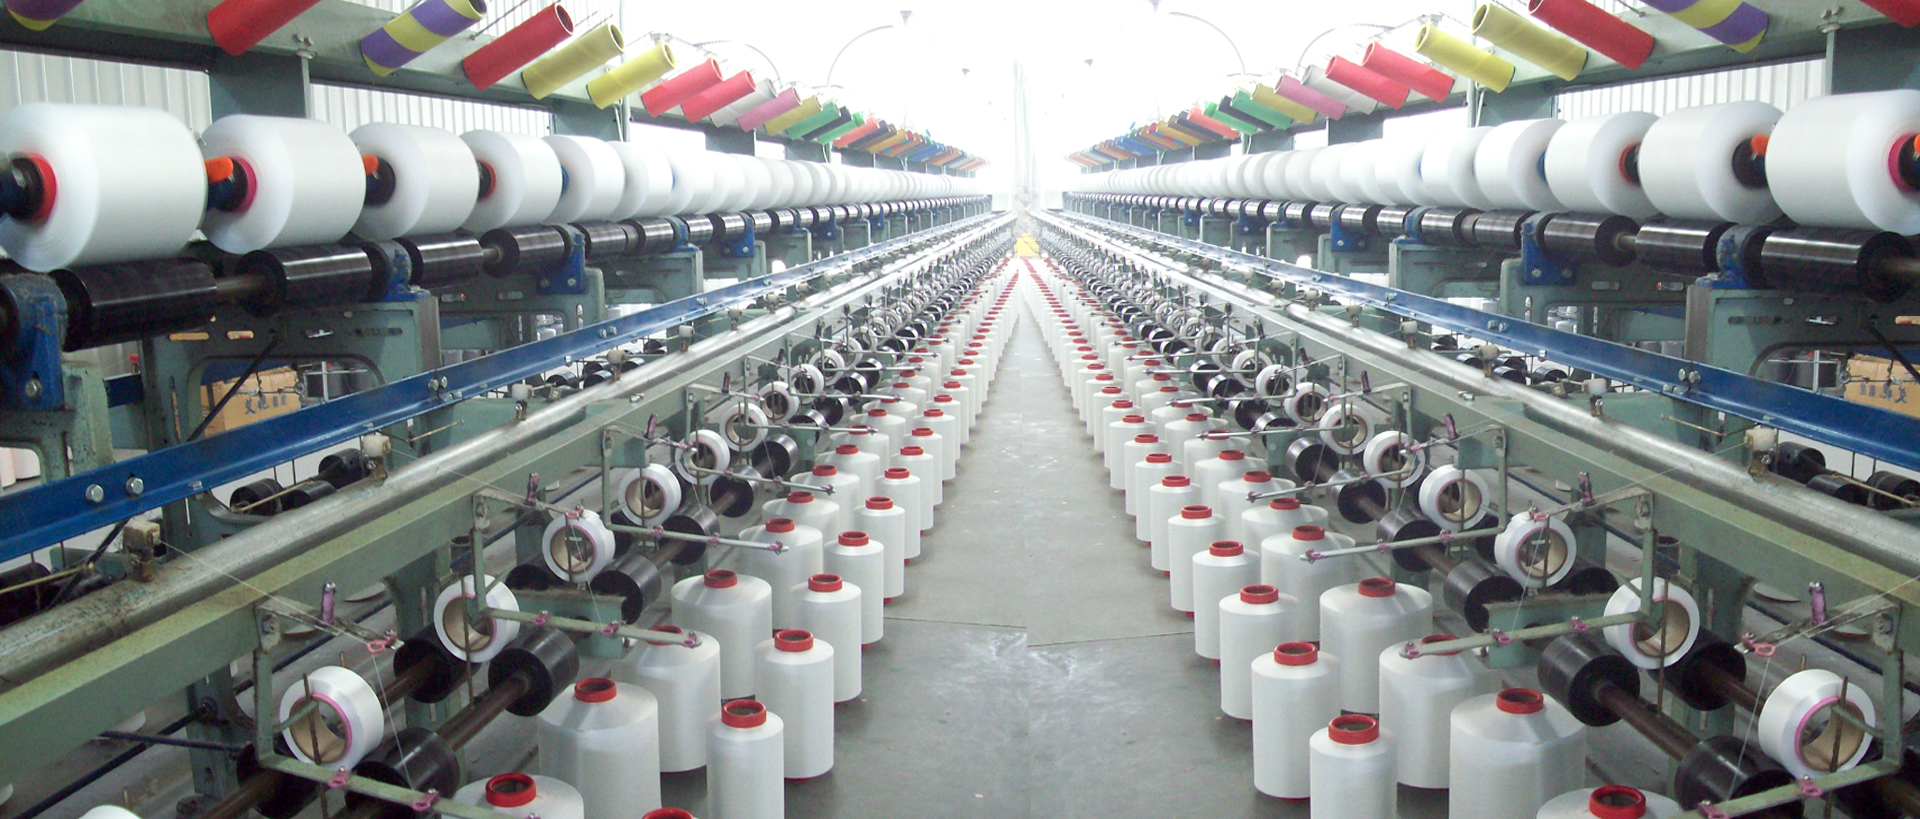 fabryka tekstylna